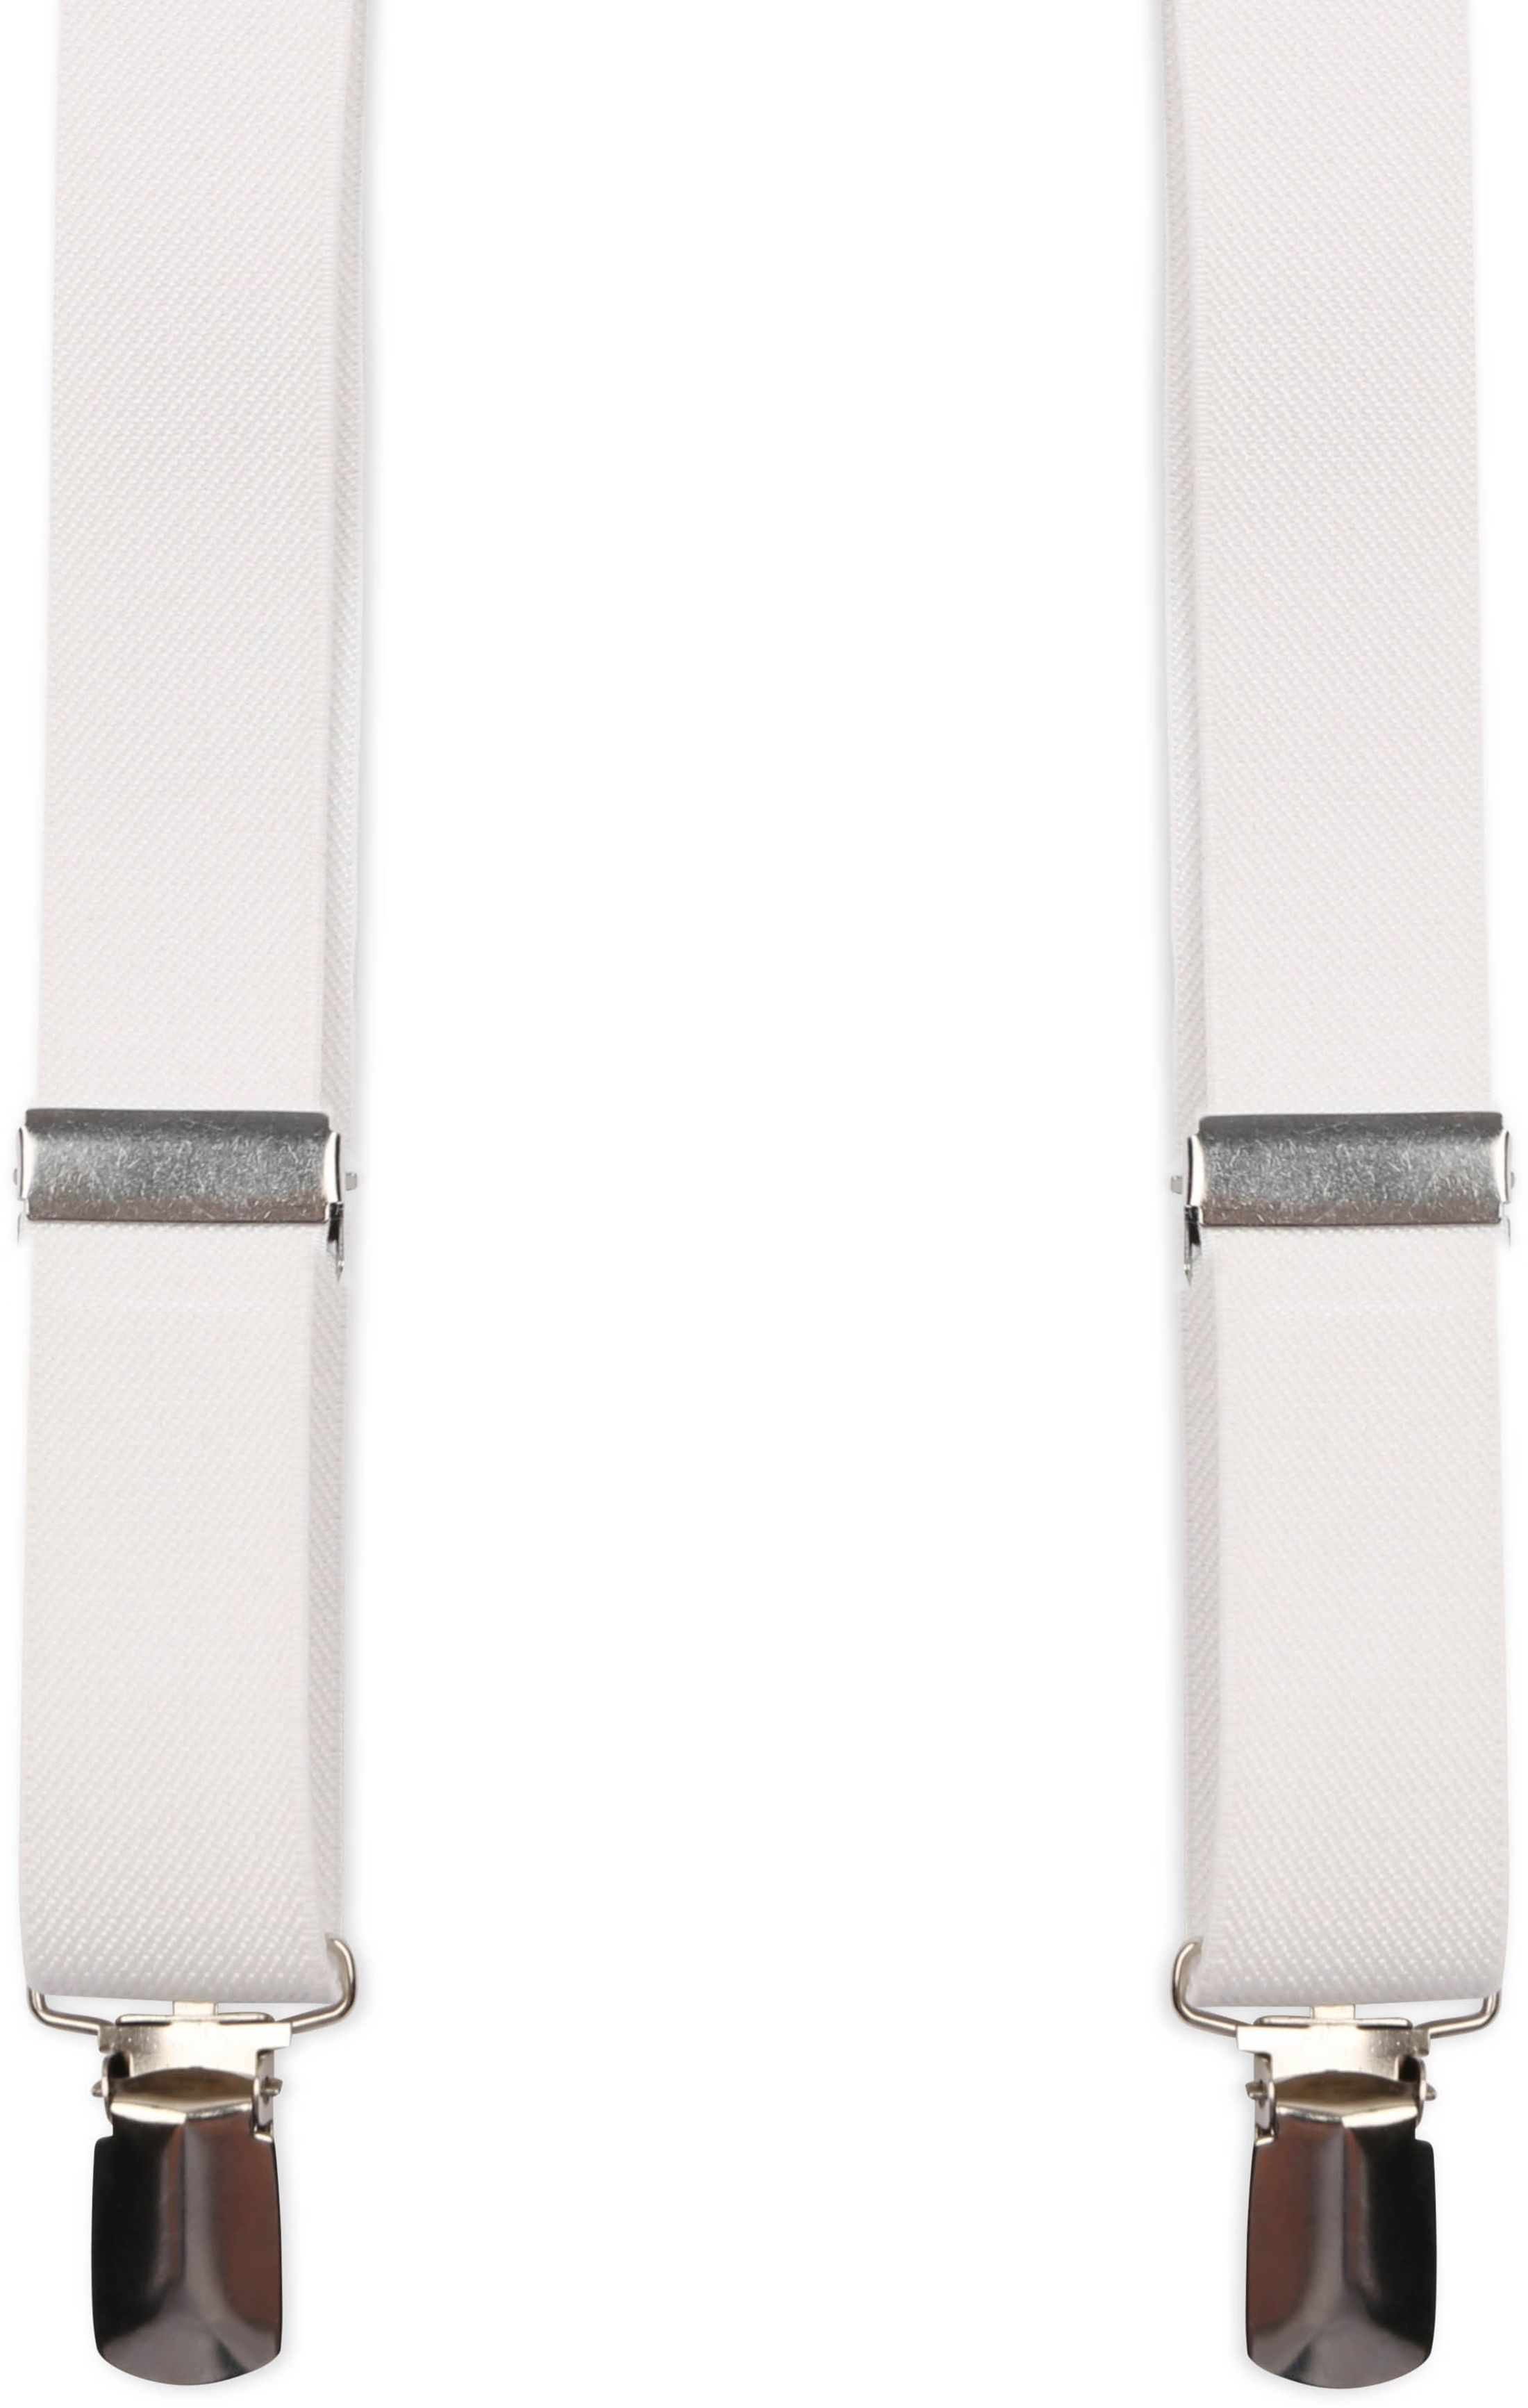 Suitable Suspenders X-Model White